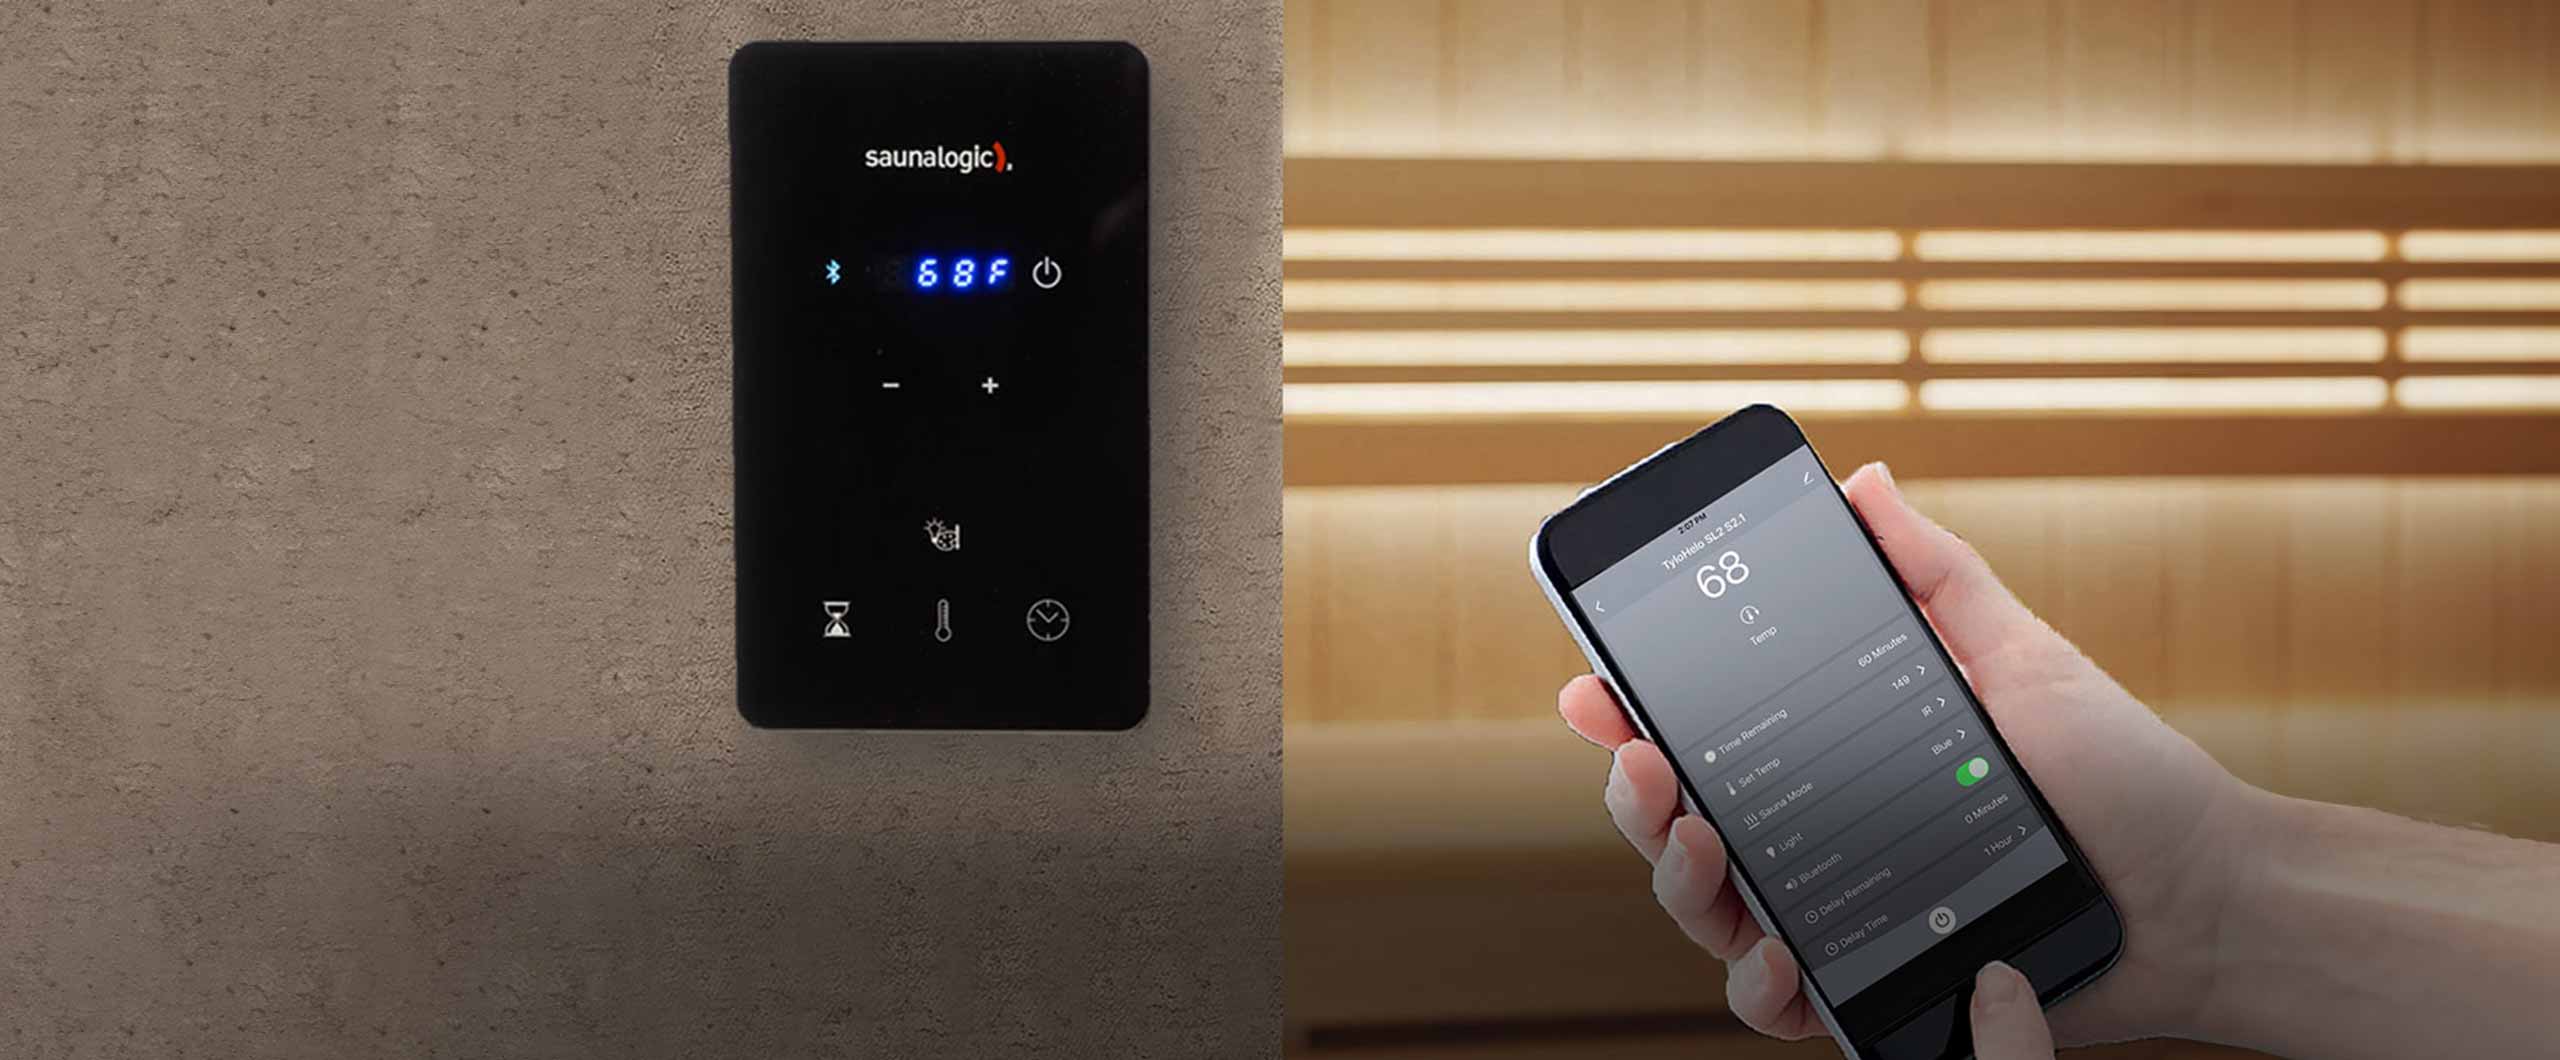 SaunaLogic2 Control and Mobile App